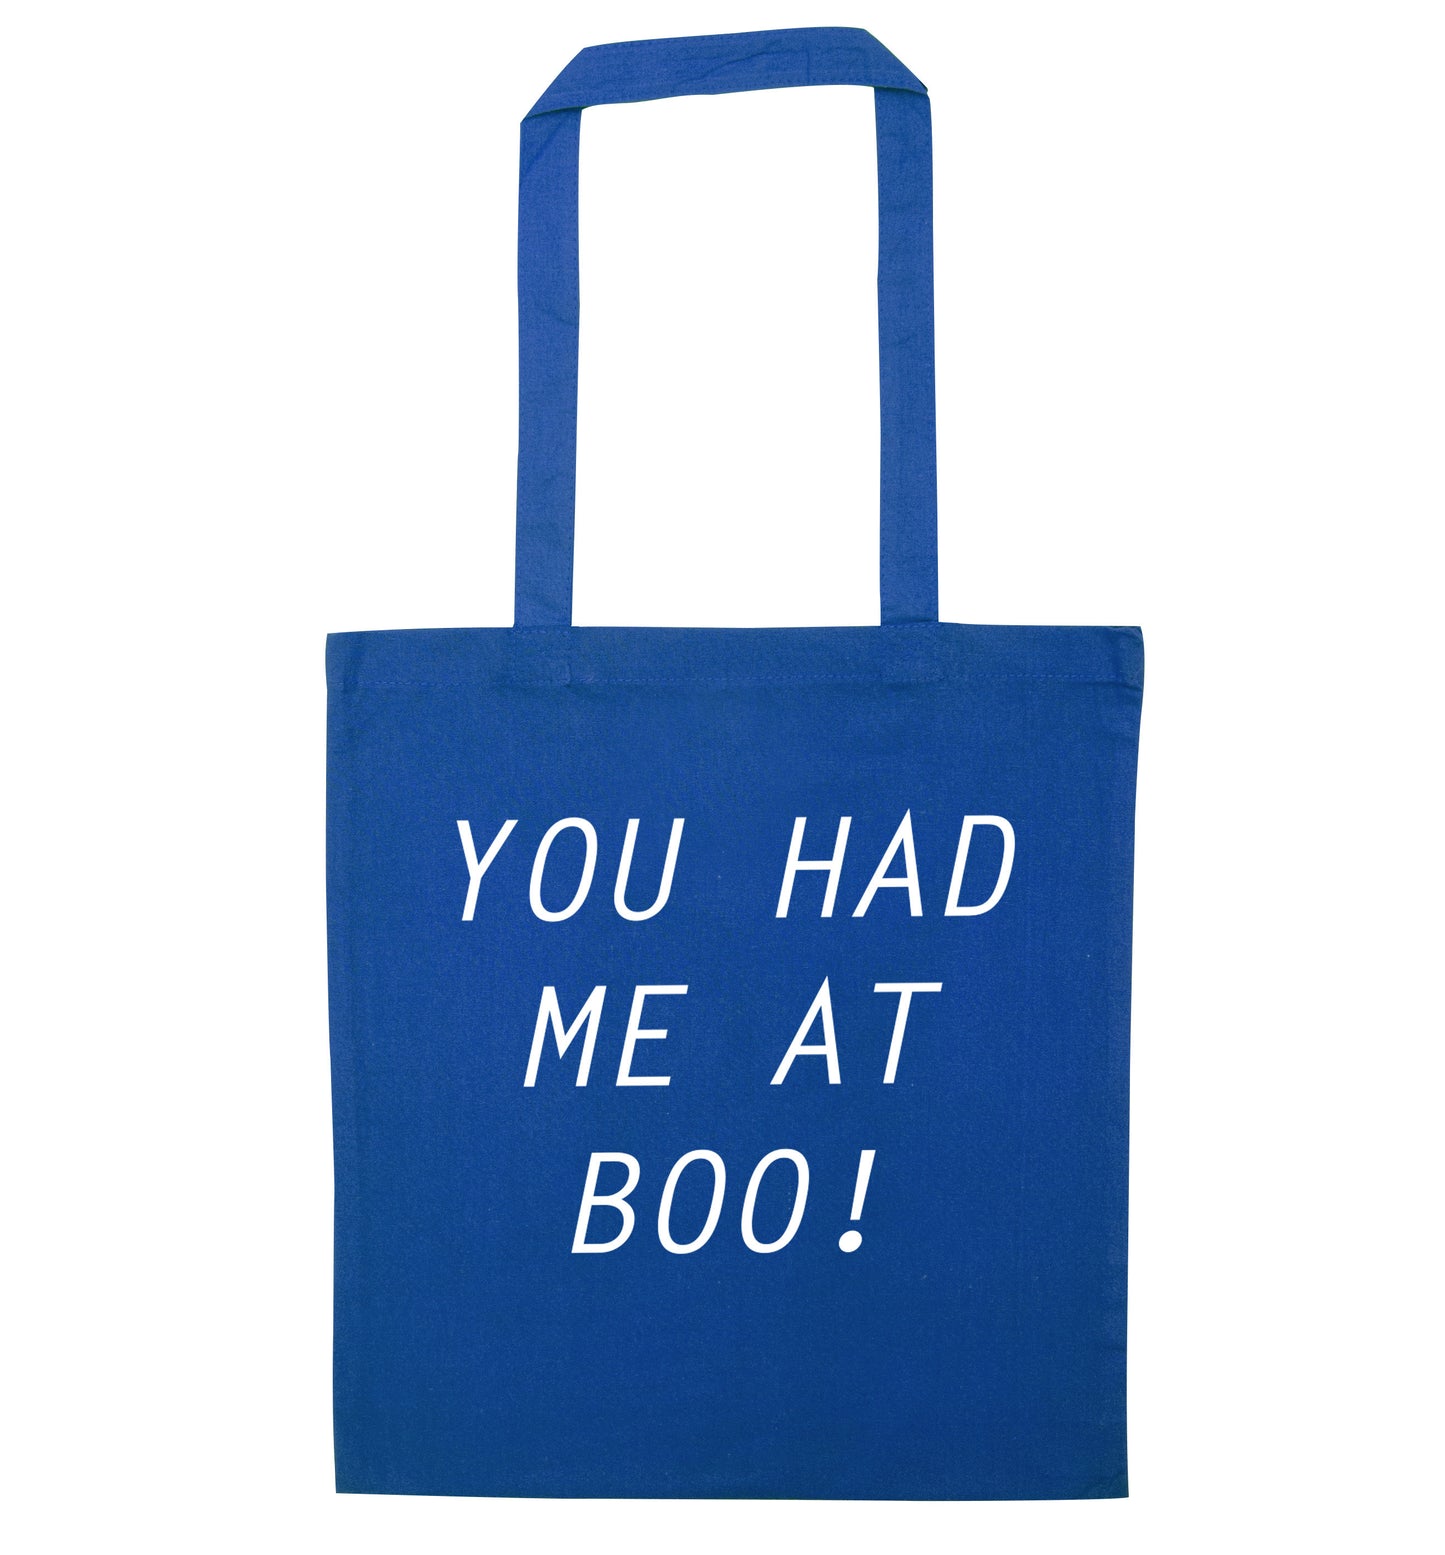 You had me at boo! blue tote bag